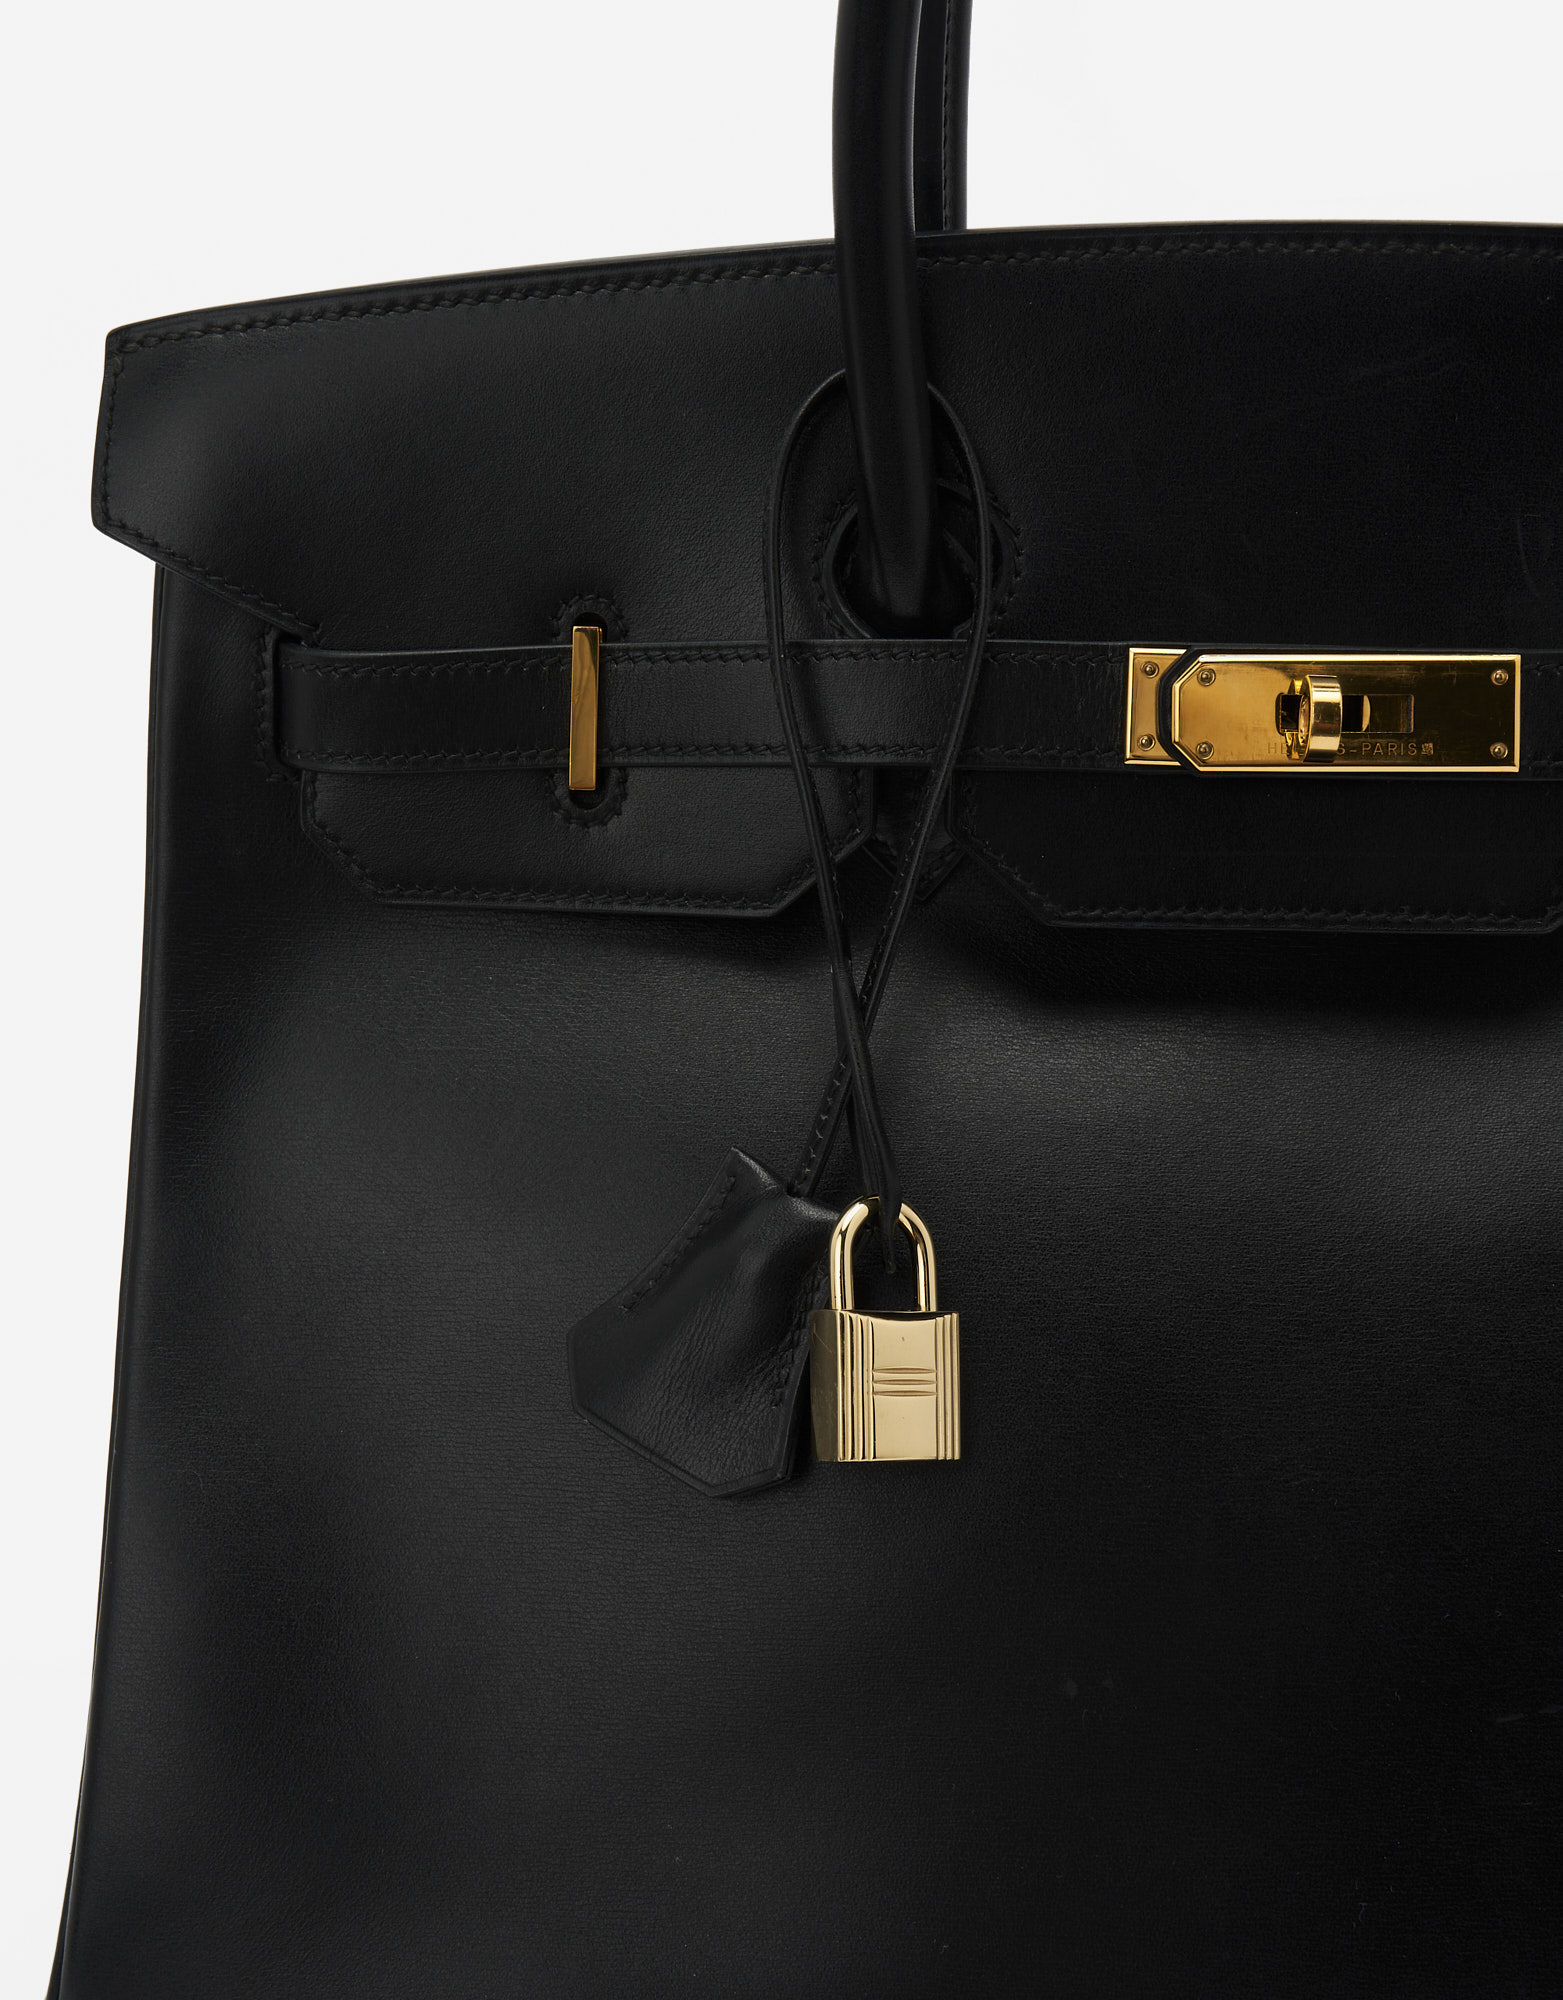 HERMES Black Box Leather Birkin 35 Handbag